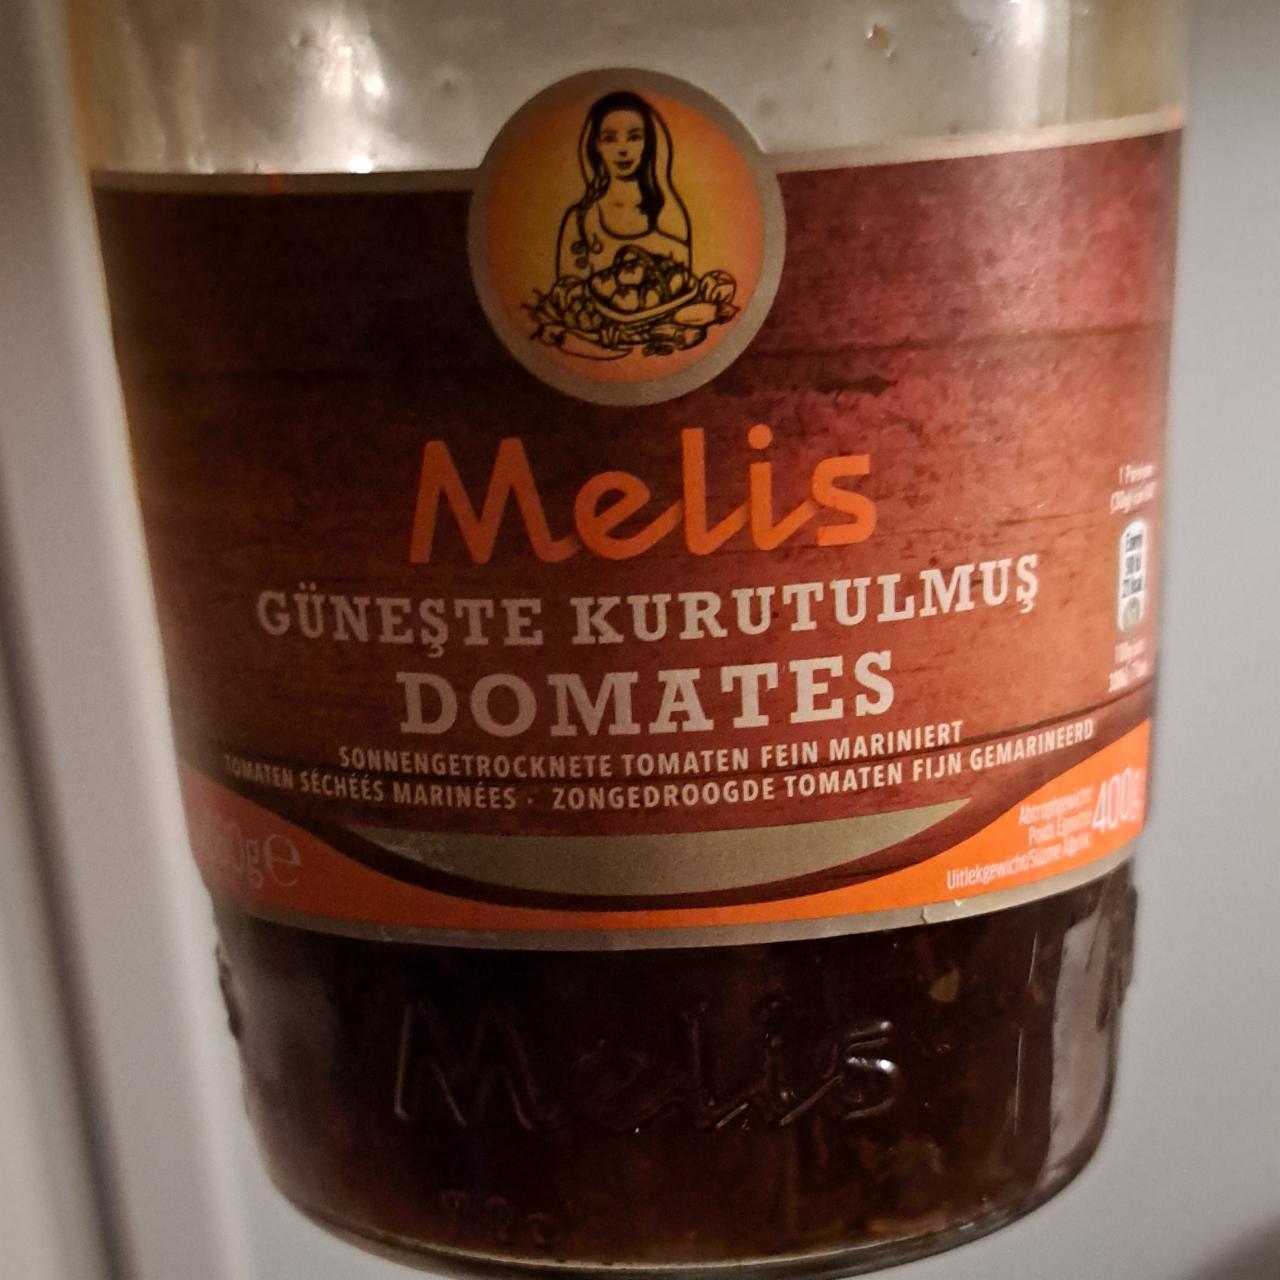 Fotografie - Guneste Kurutulumus Domates Tomaten Melis